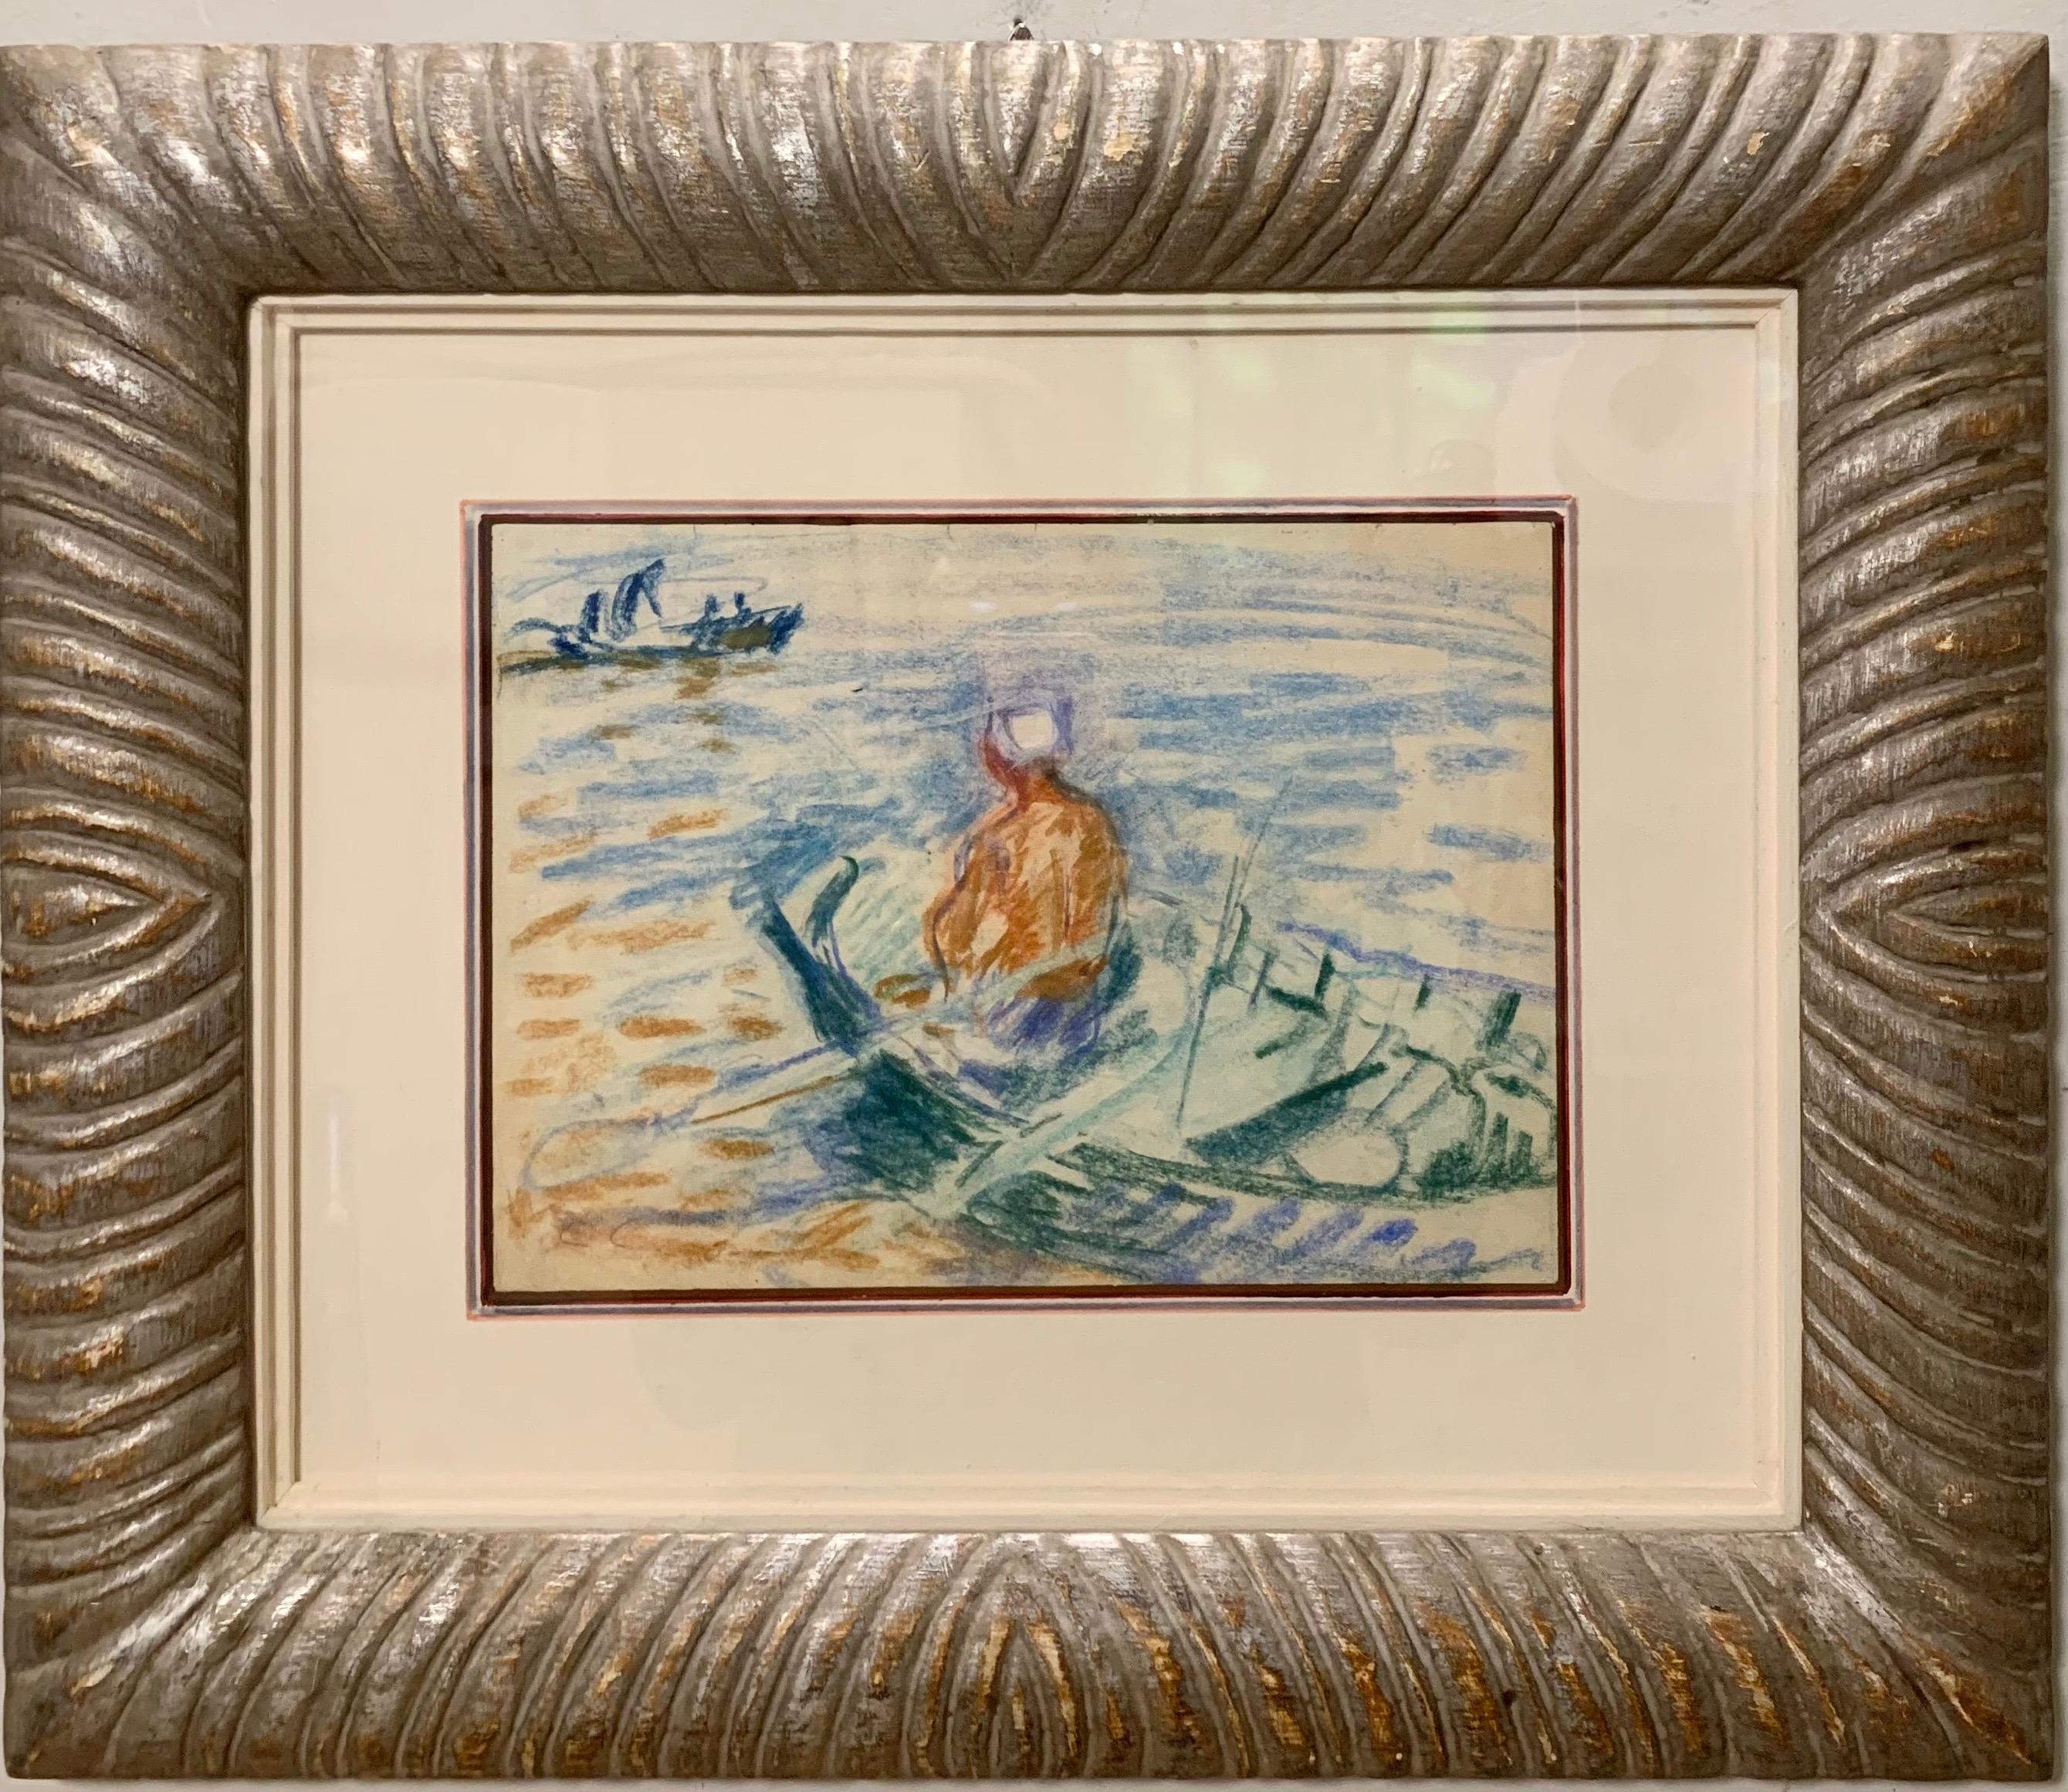 Gleb Savinov Figurative Art - "Boat on the lake" Pastel cm. 29 x 21 1950 